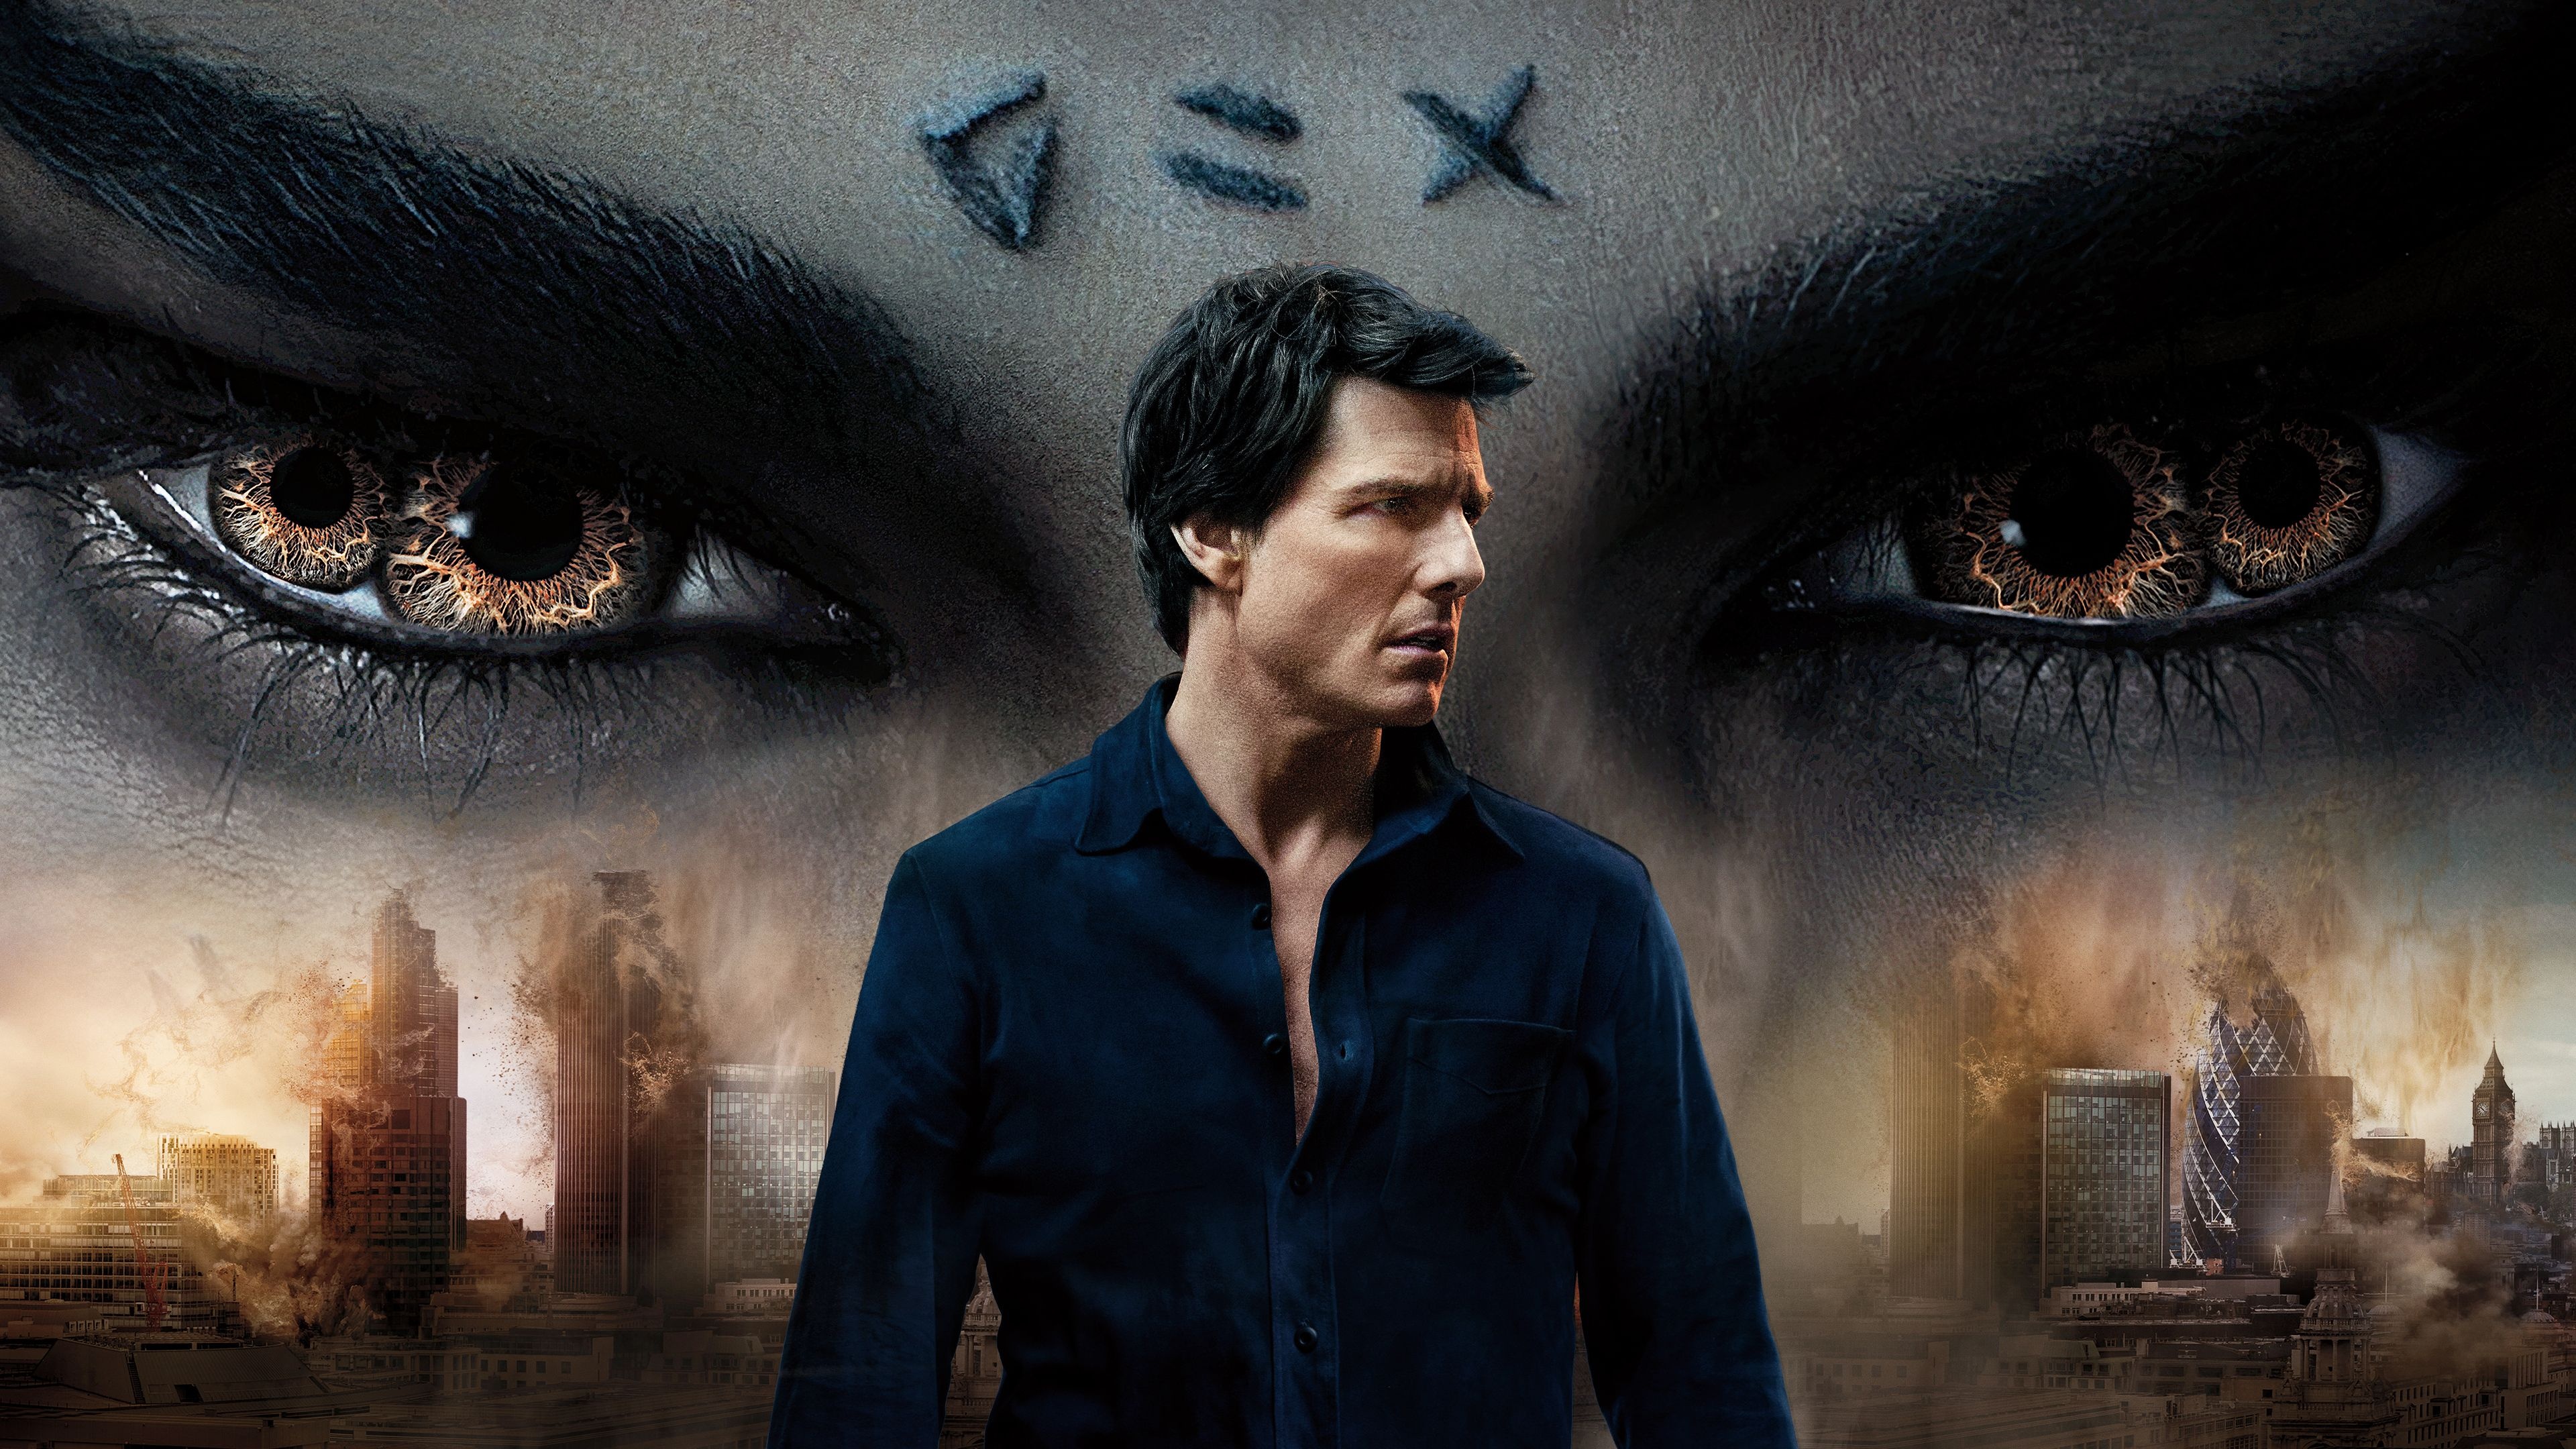 Mummy movie, Tom Cruise wallpapers, High quality, Action-adventure, 3840x2160 4K Desktop